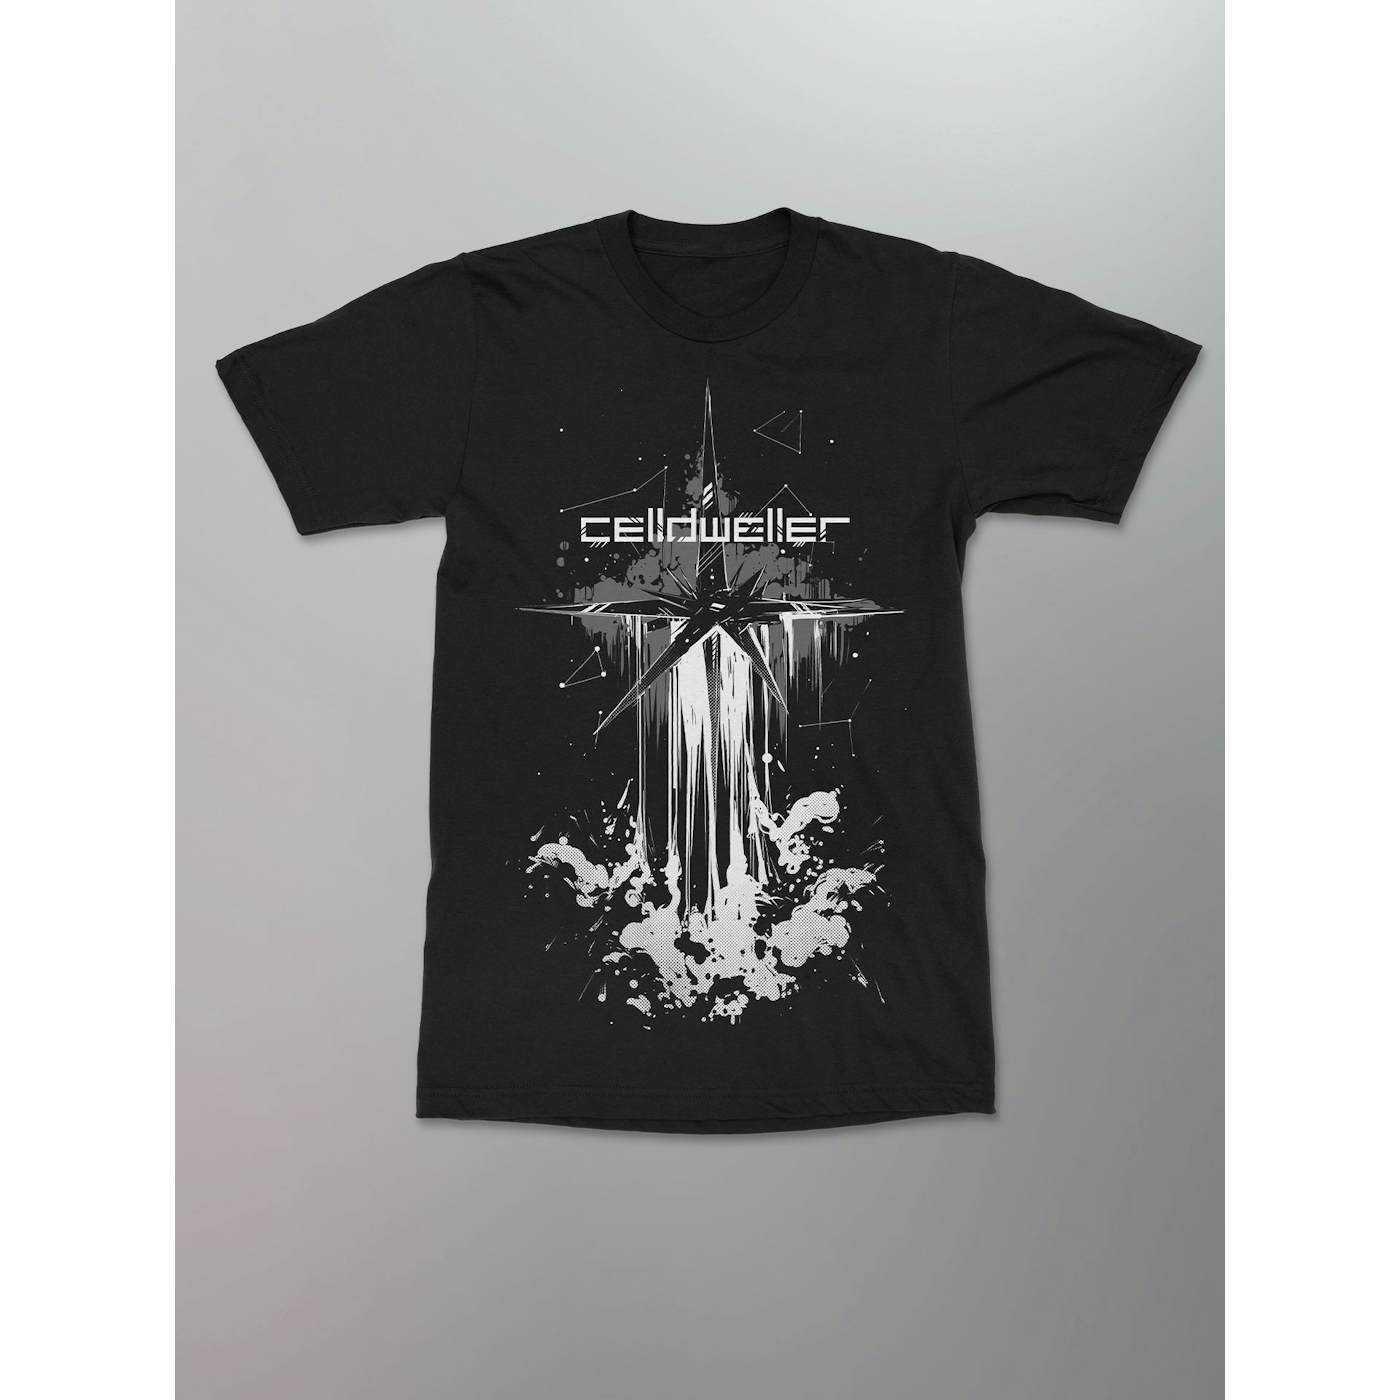 Celldweller - Wish Upon A Blackstar Shirt